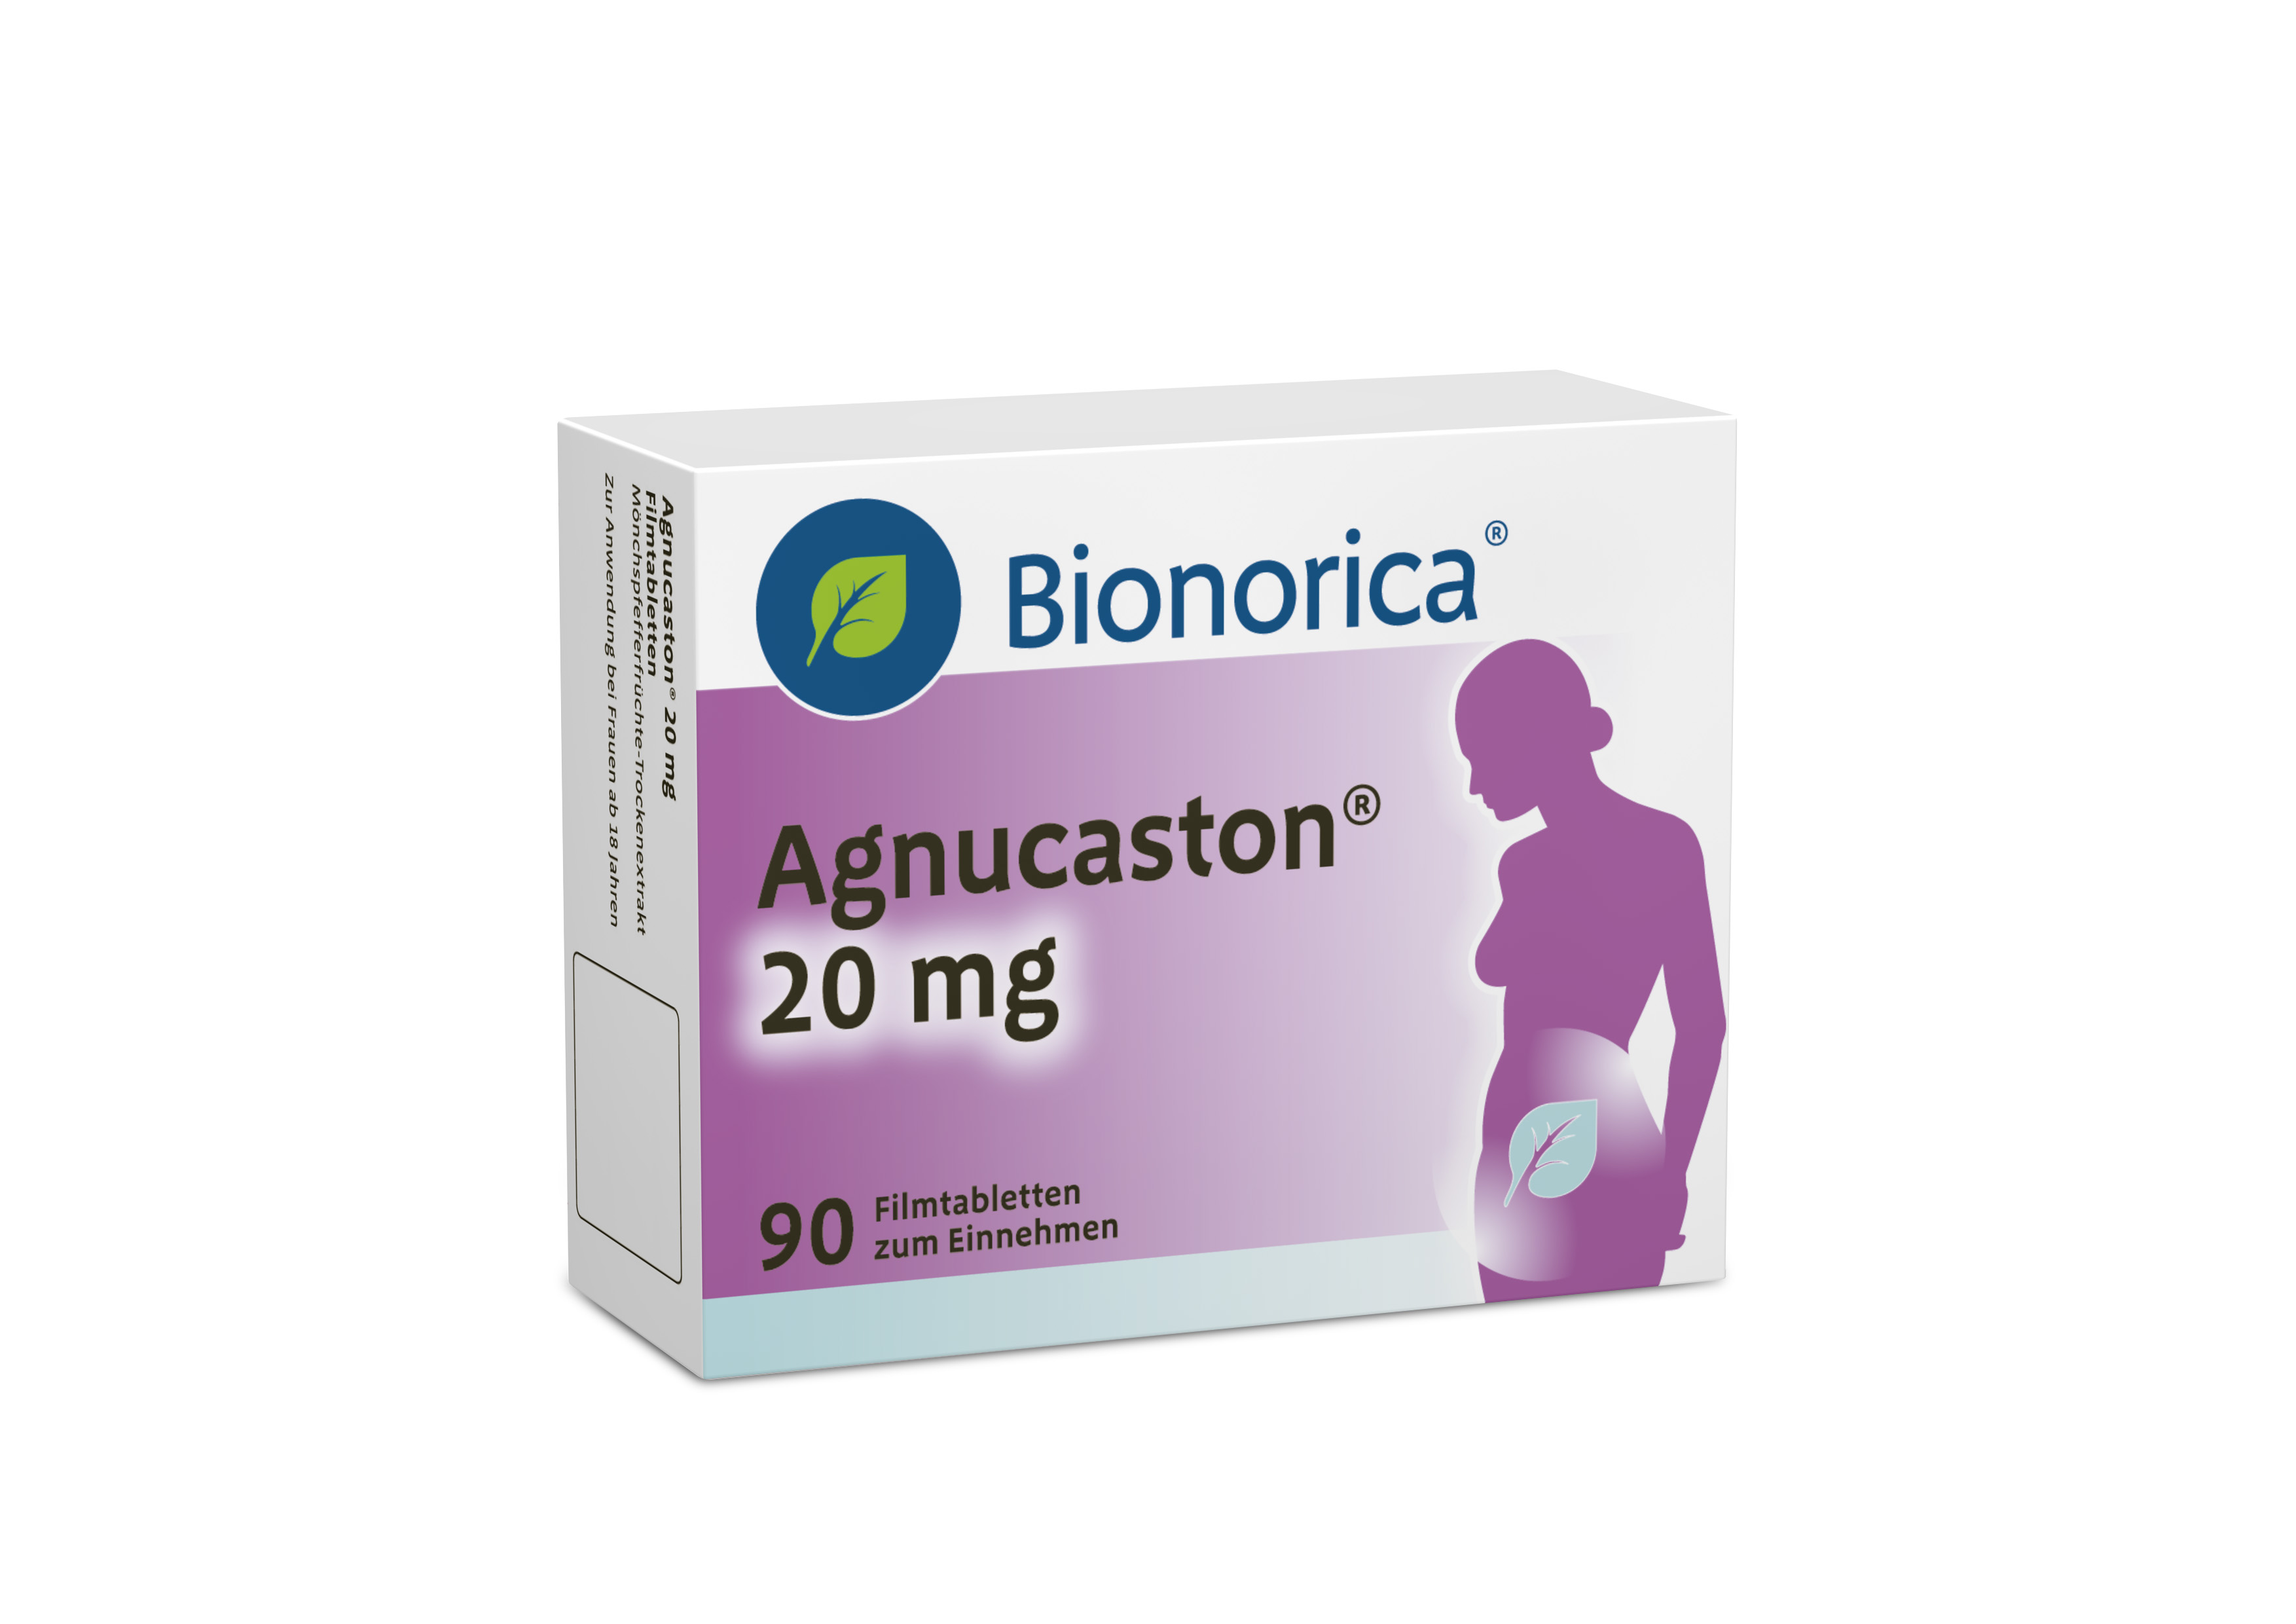 Agnucaston® 20 mg Packung